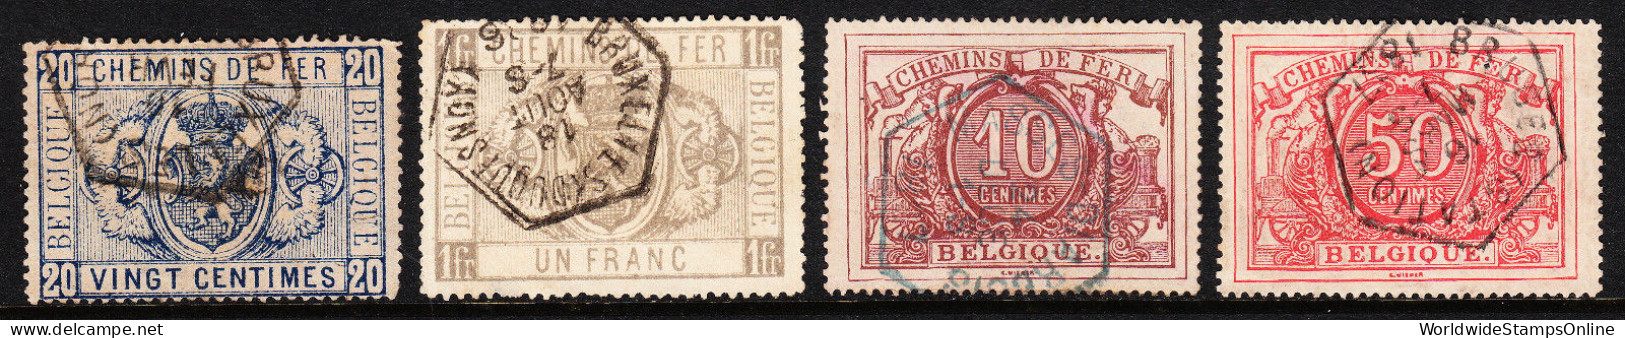 BELGIUM — SCOTT Q2//Q11 — 1879-1886 RAILWAY ISSUES — USED — SCV $37.50 - Mint